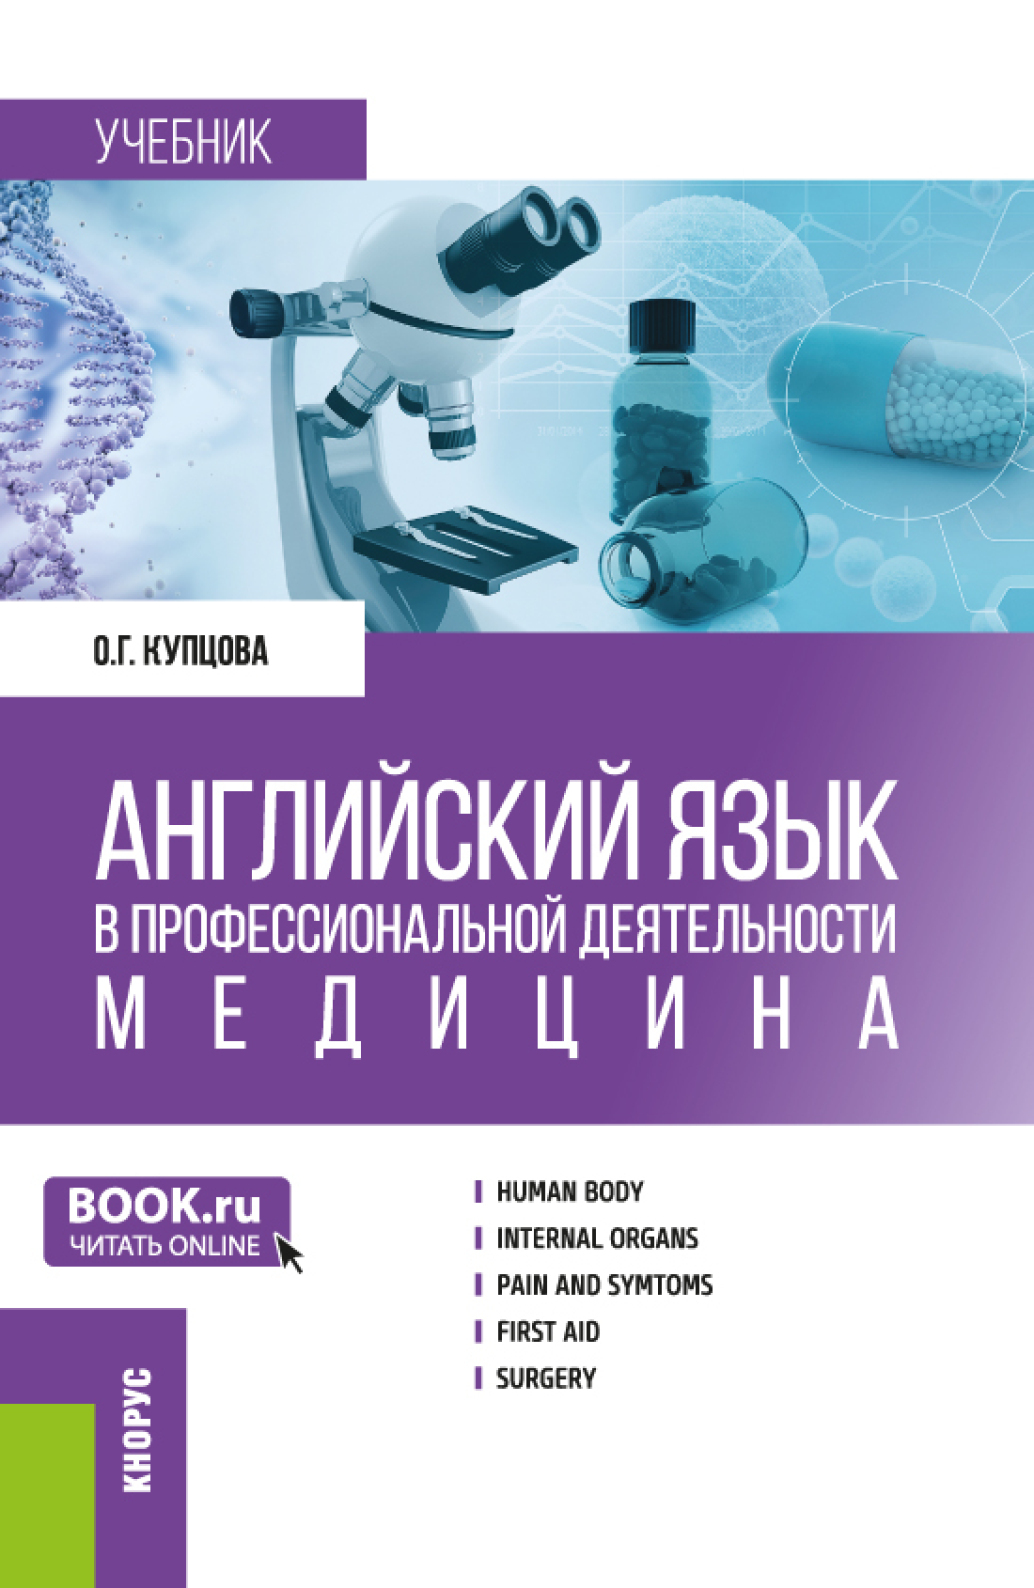 Book ru английский язык